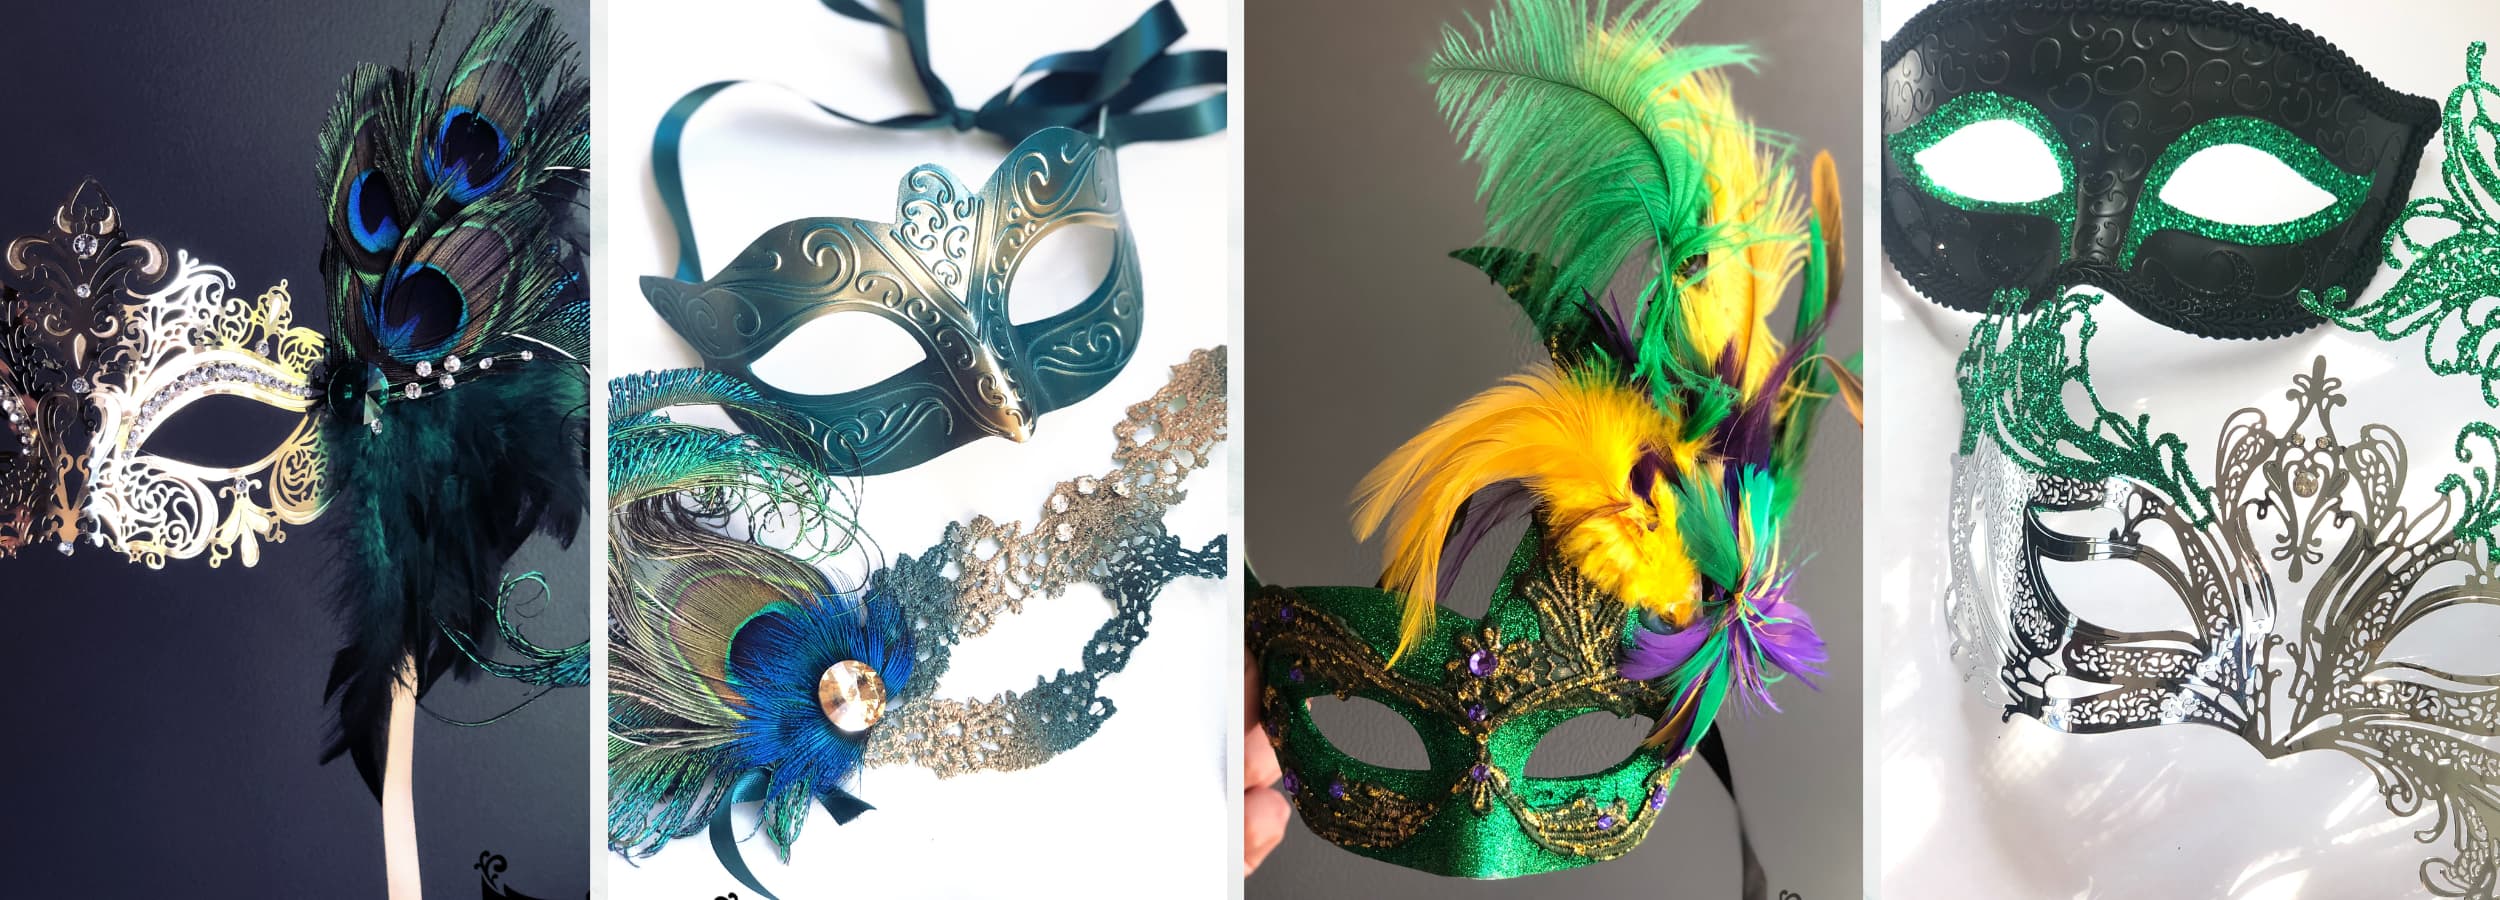 Green Masked Man Masquerade Mask - Screamers Costumes